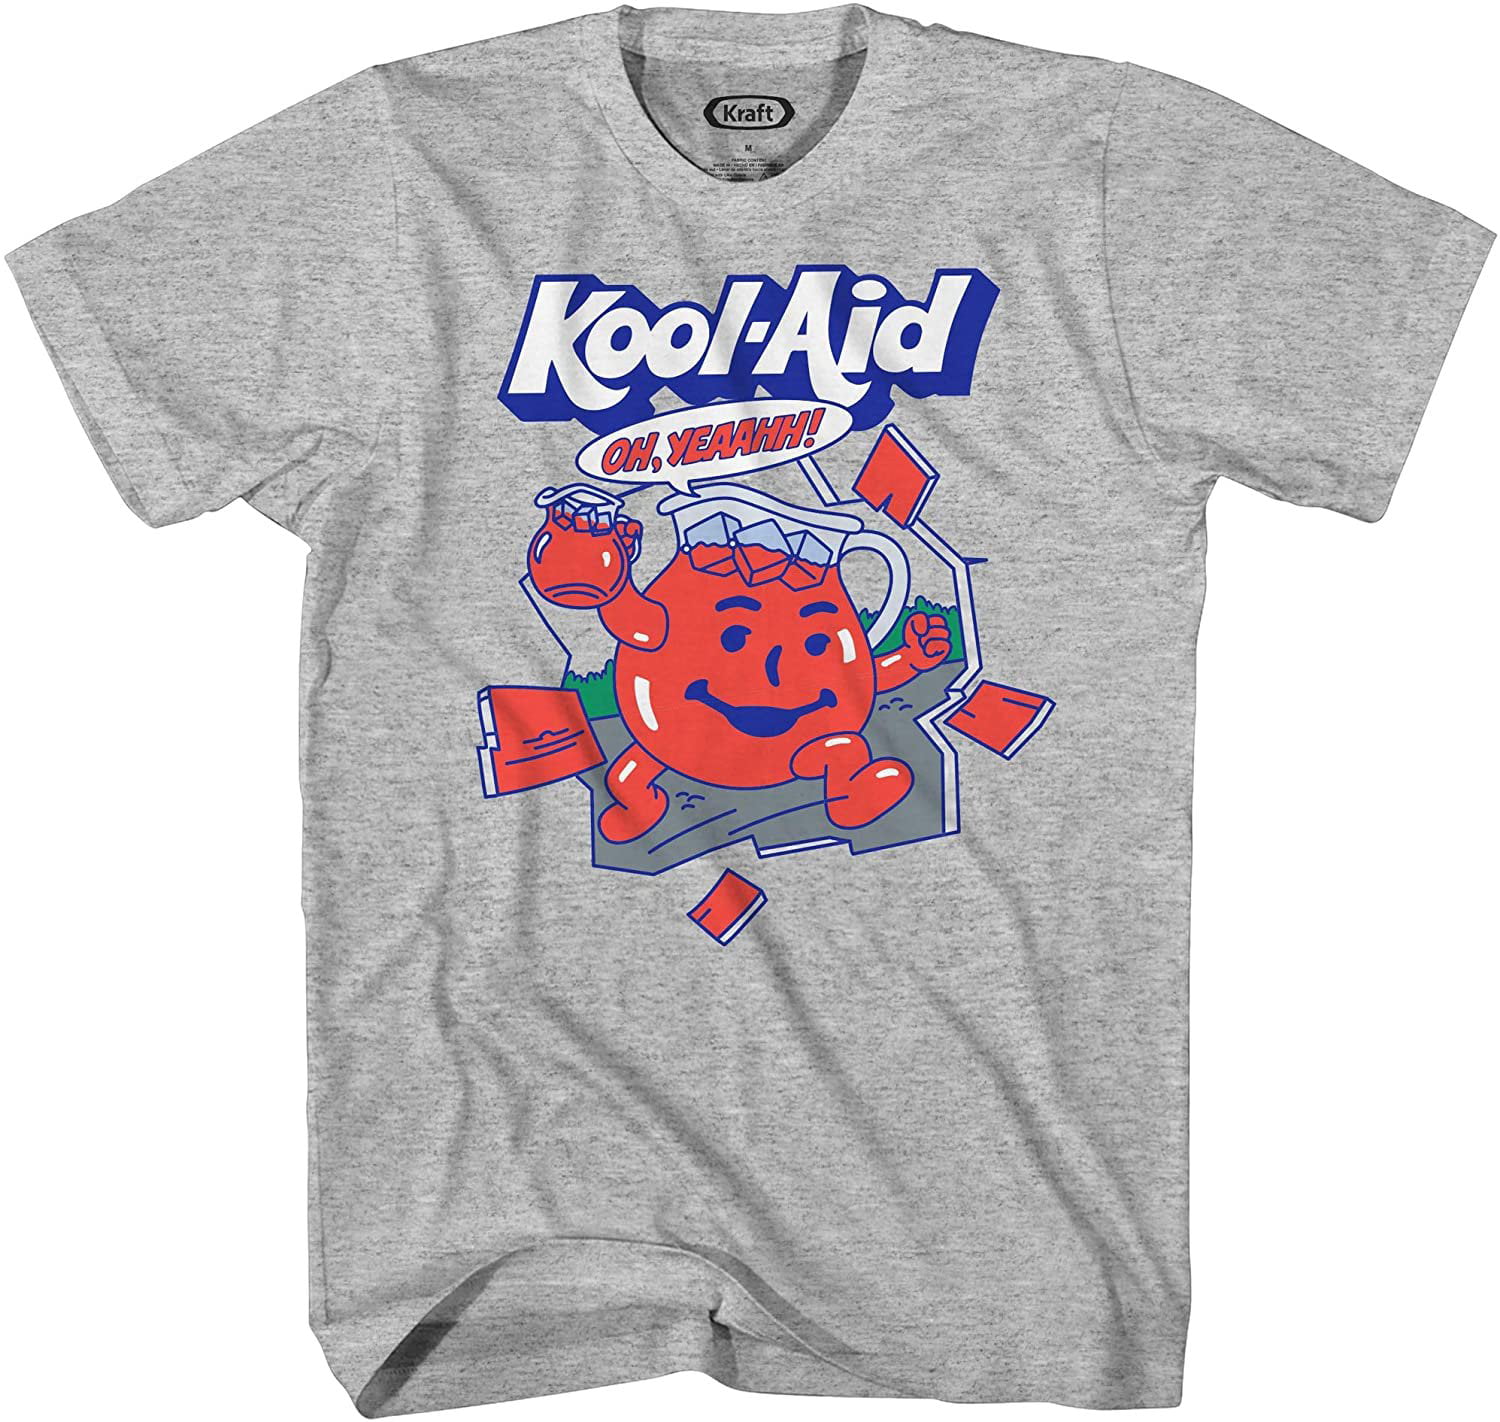 Kool-Aid - Kool-Aid Mens Oh Yeah Shirt Drink Mix Man hy Yeah Graphic T ...
 Kool Aid Shirt